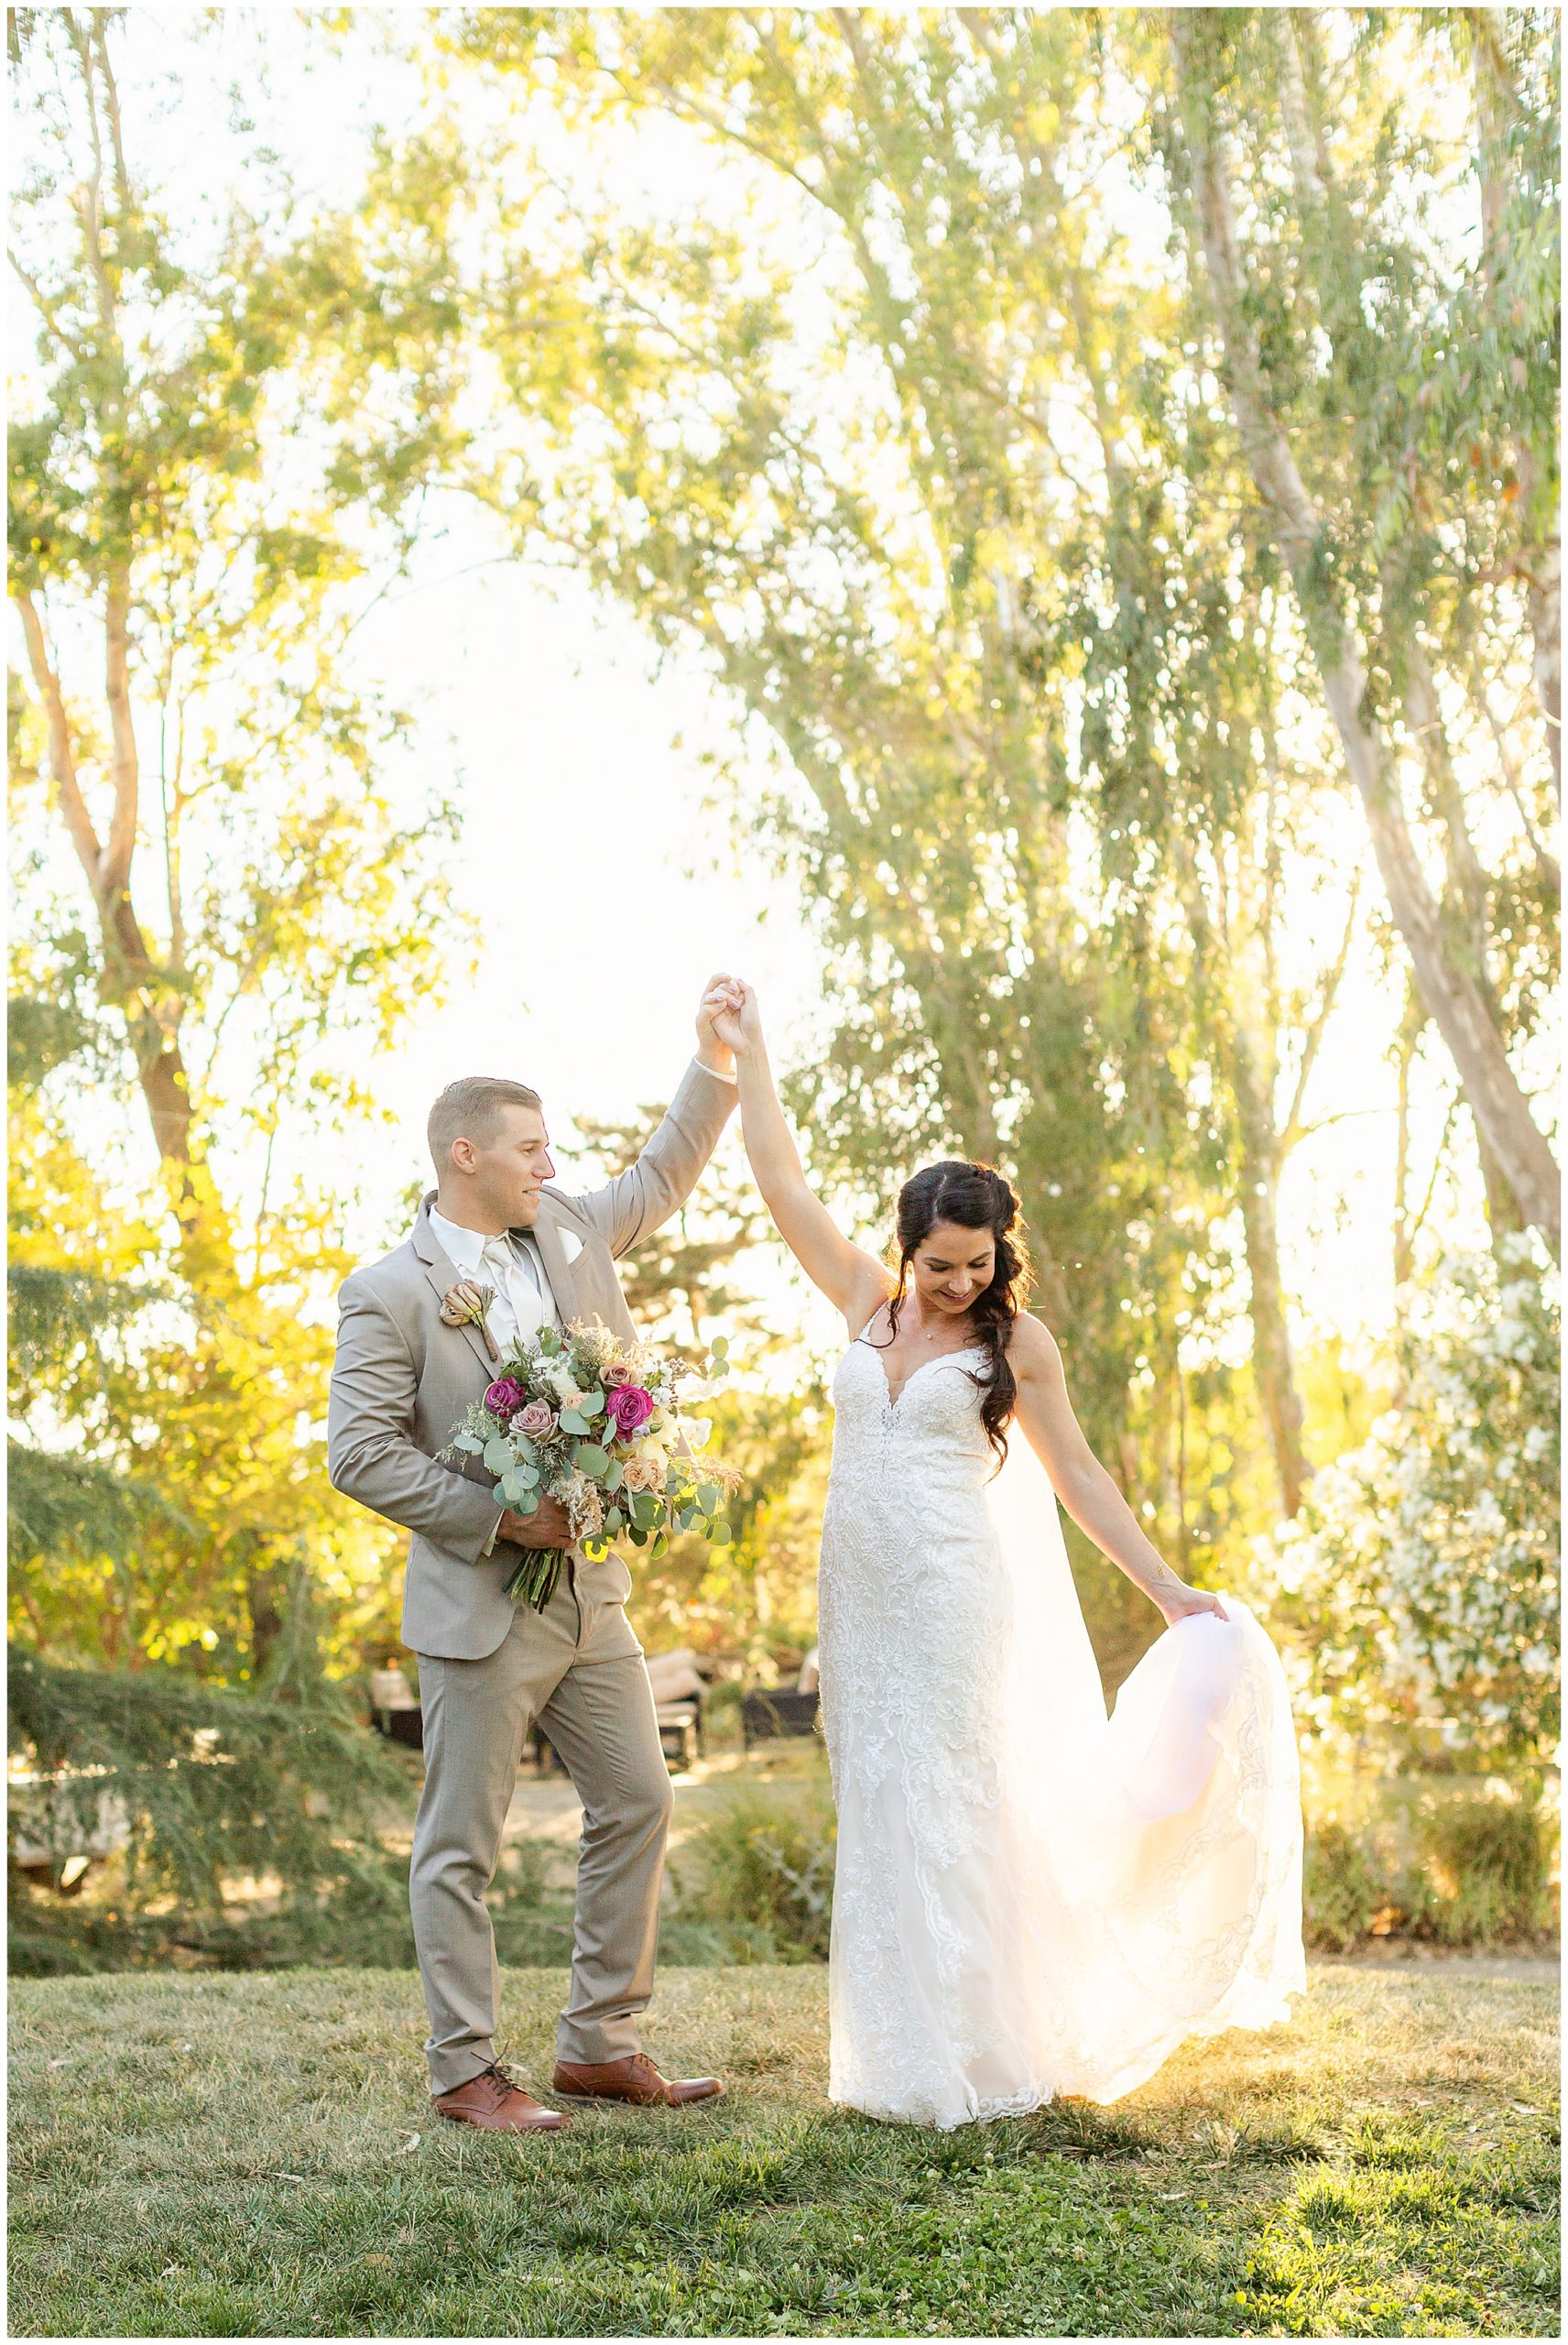 Twirl and Dance on Your Wedding Day | Lauren + Sean